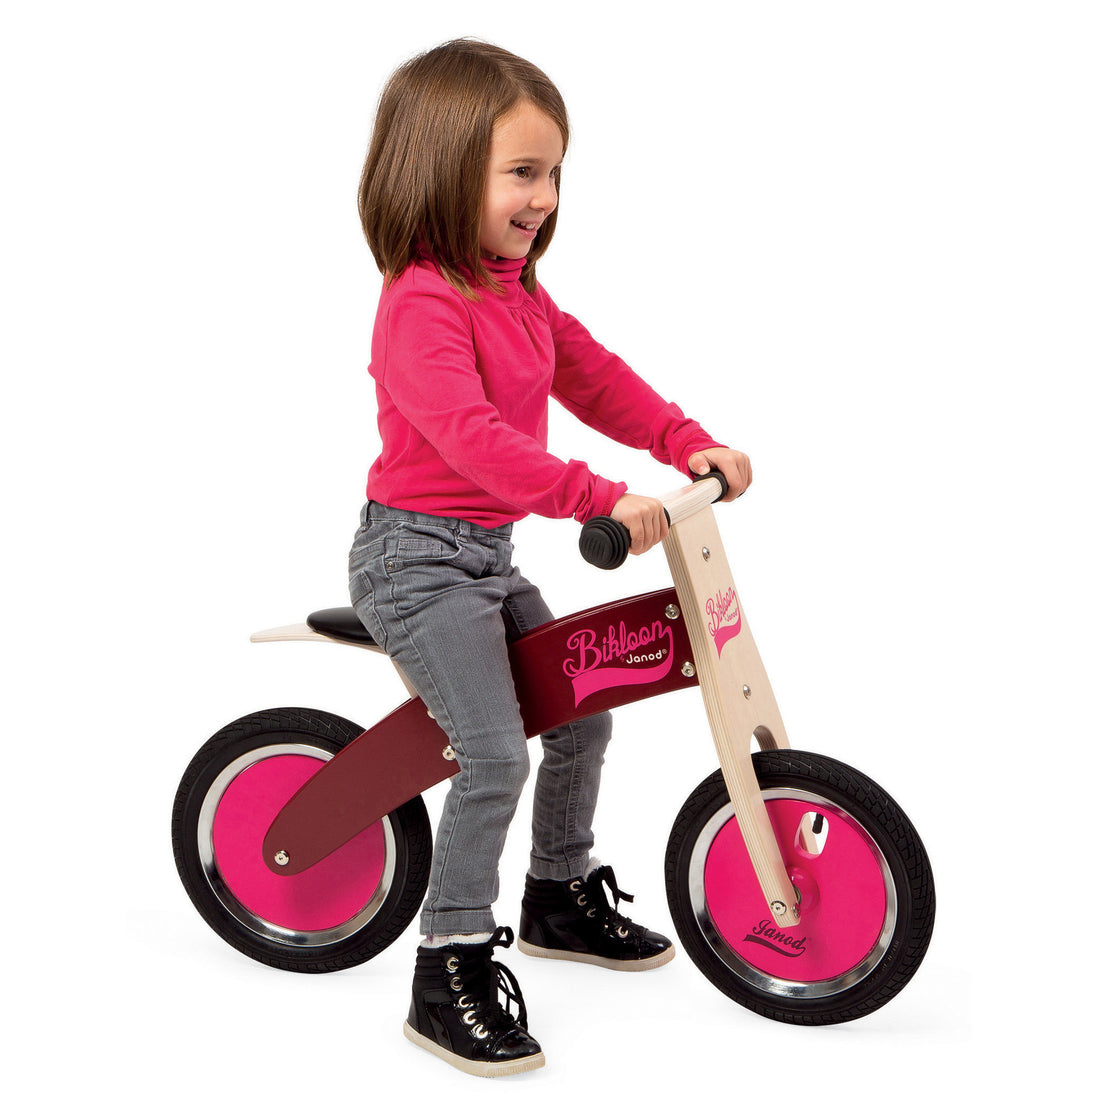 janod-bikloon-balance-bike-pink-burgundy-03